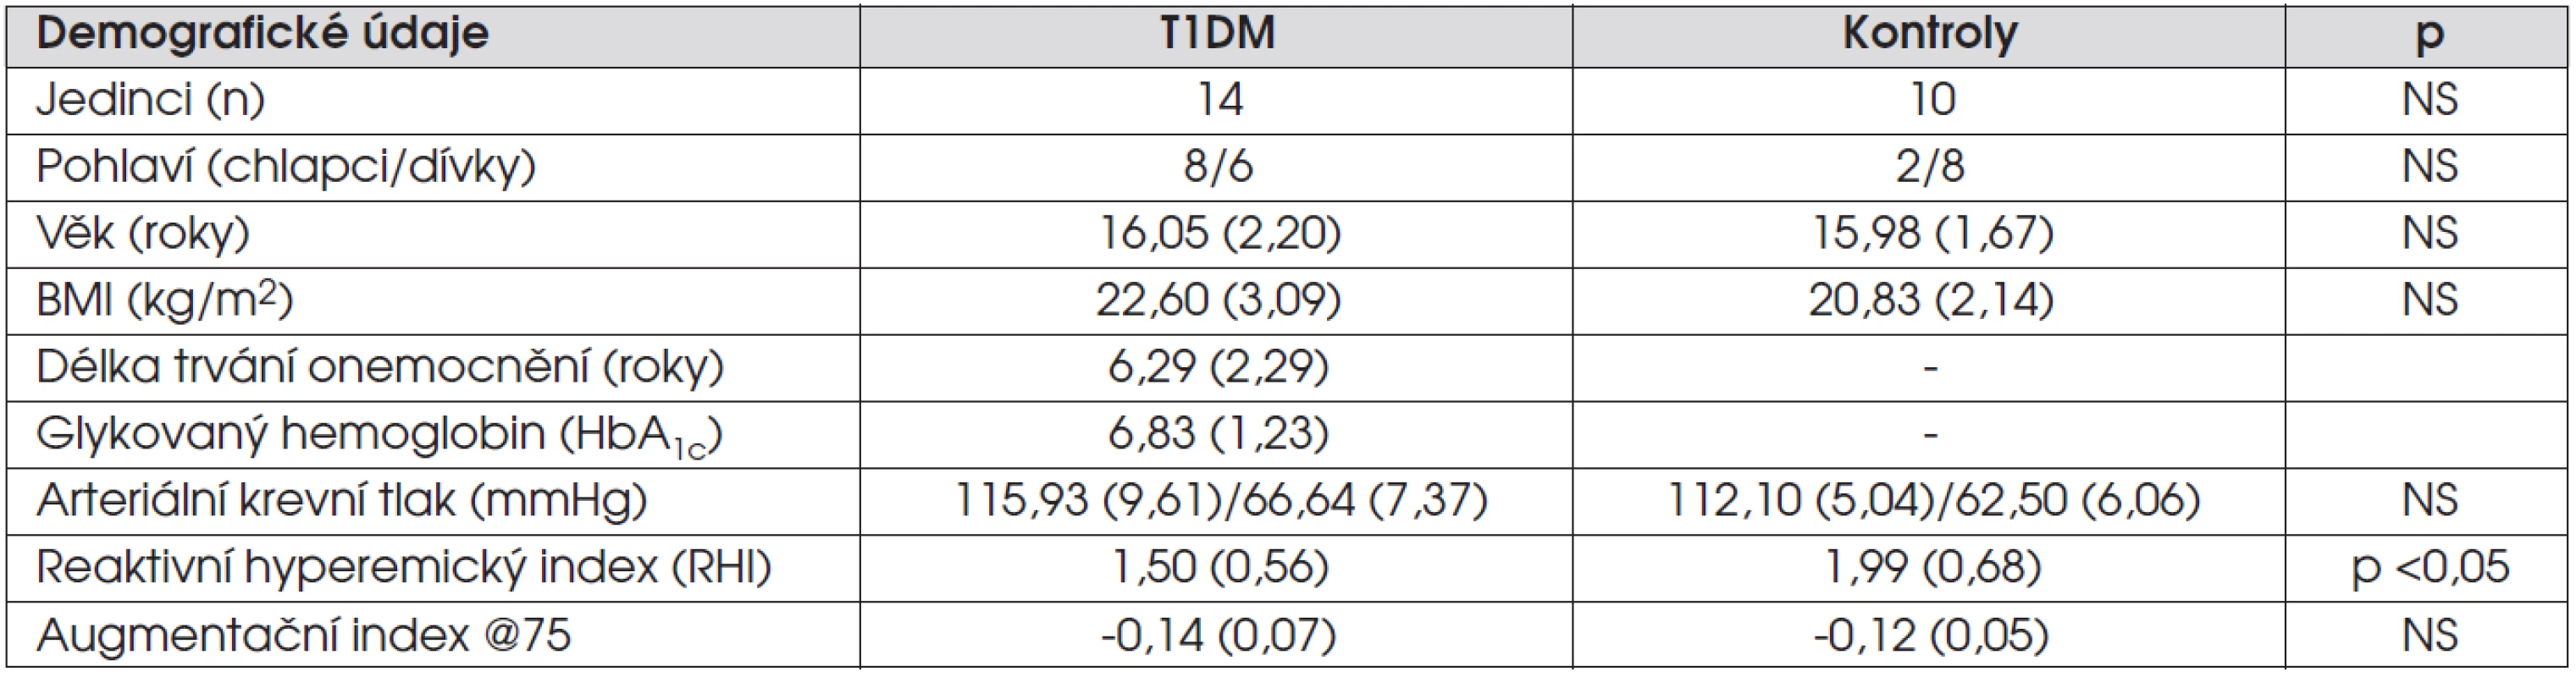 Demografické údaje T1DM.